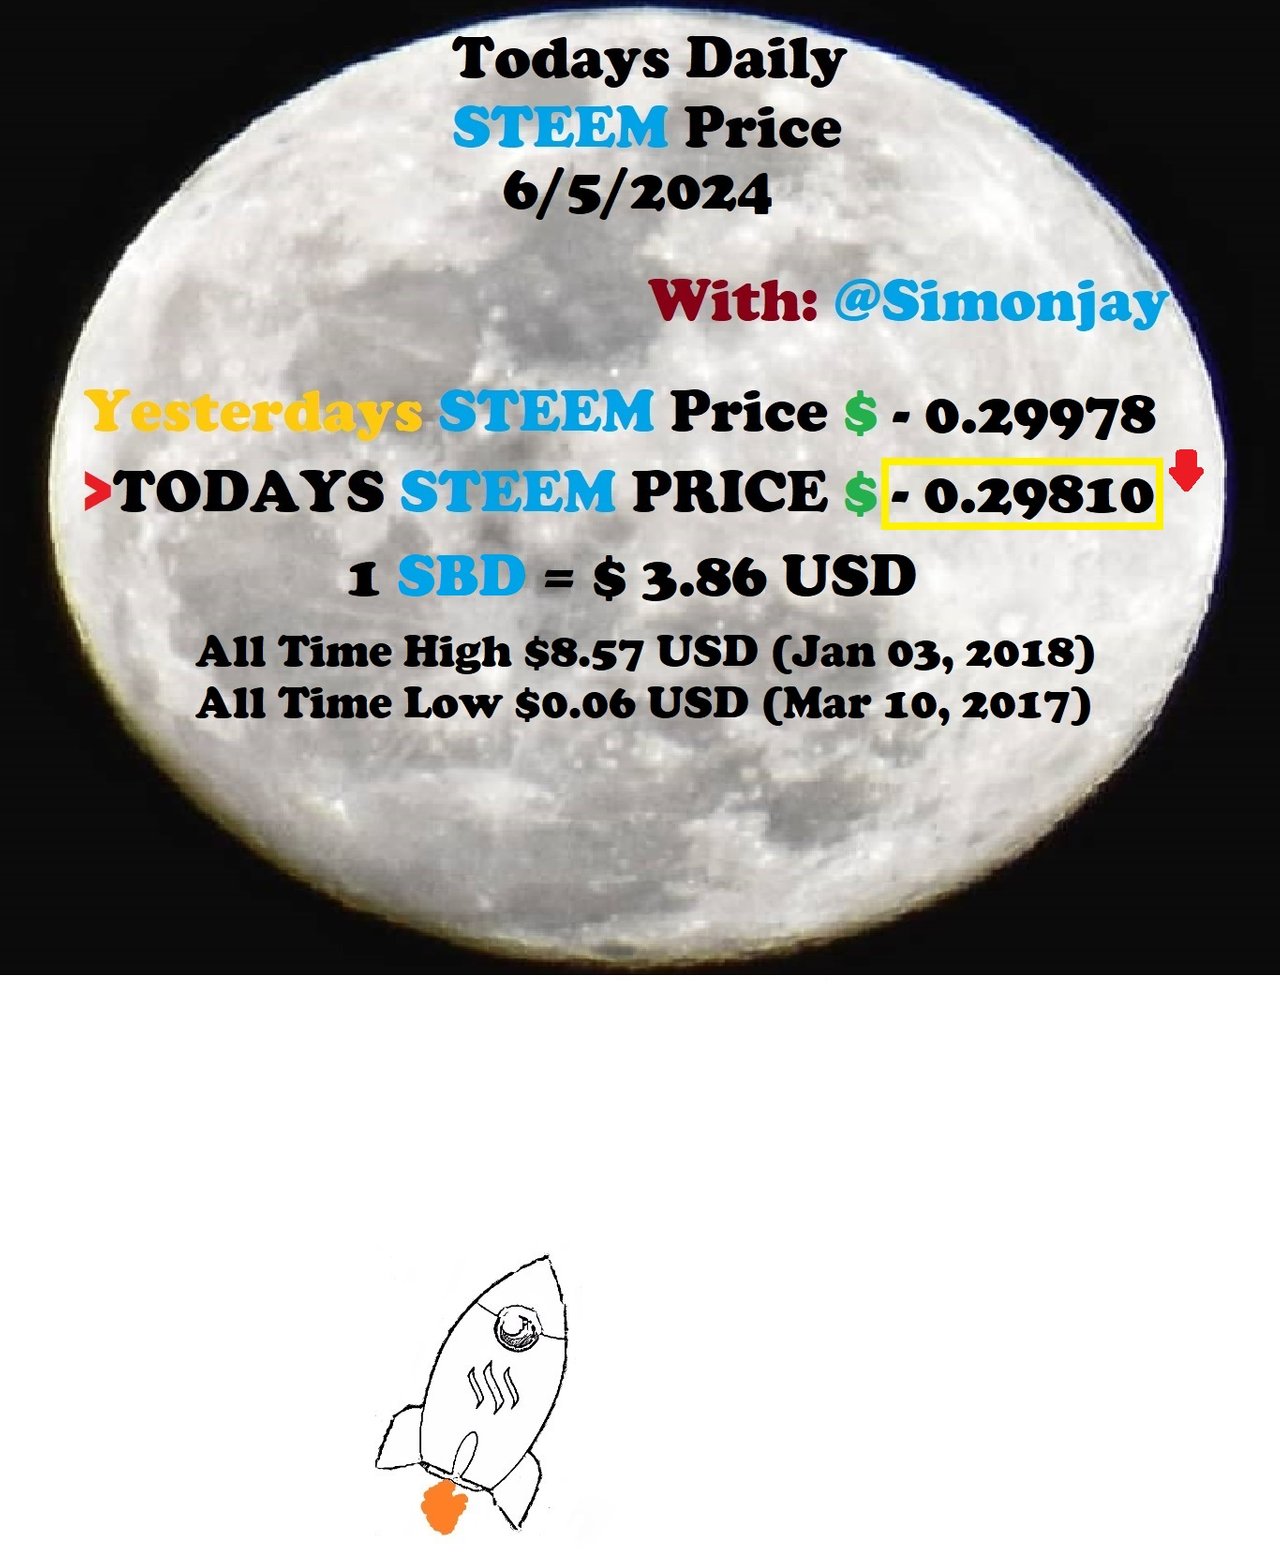 Steem Daily Price MoonTemplate06052024.jpg